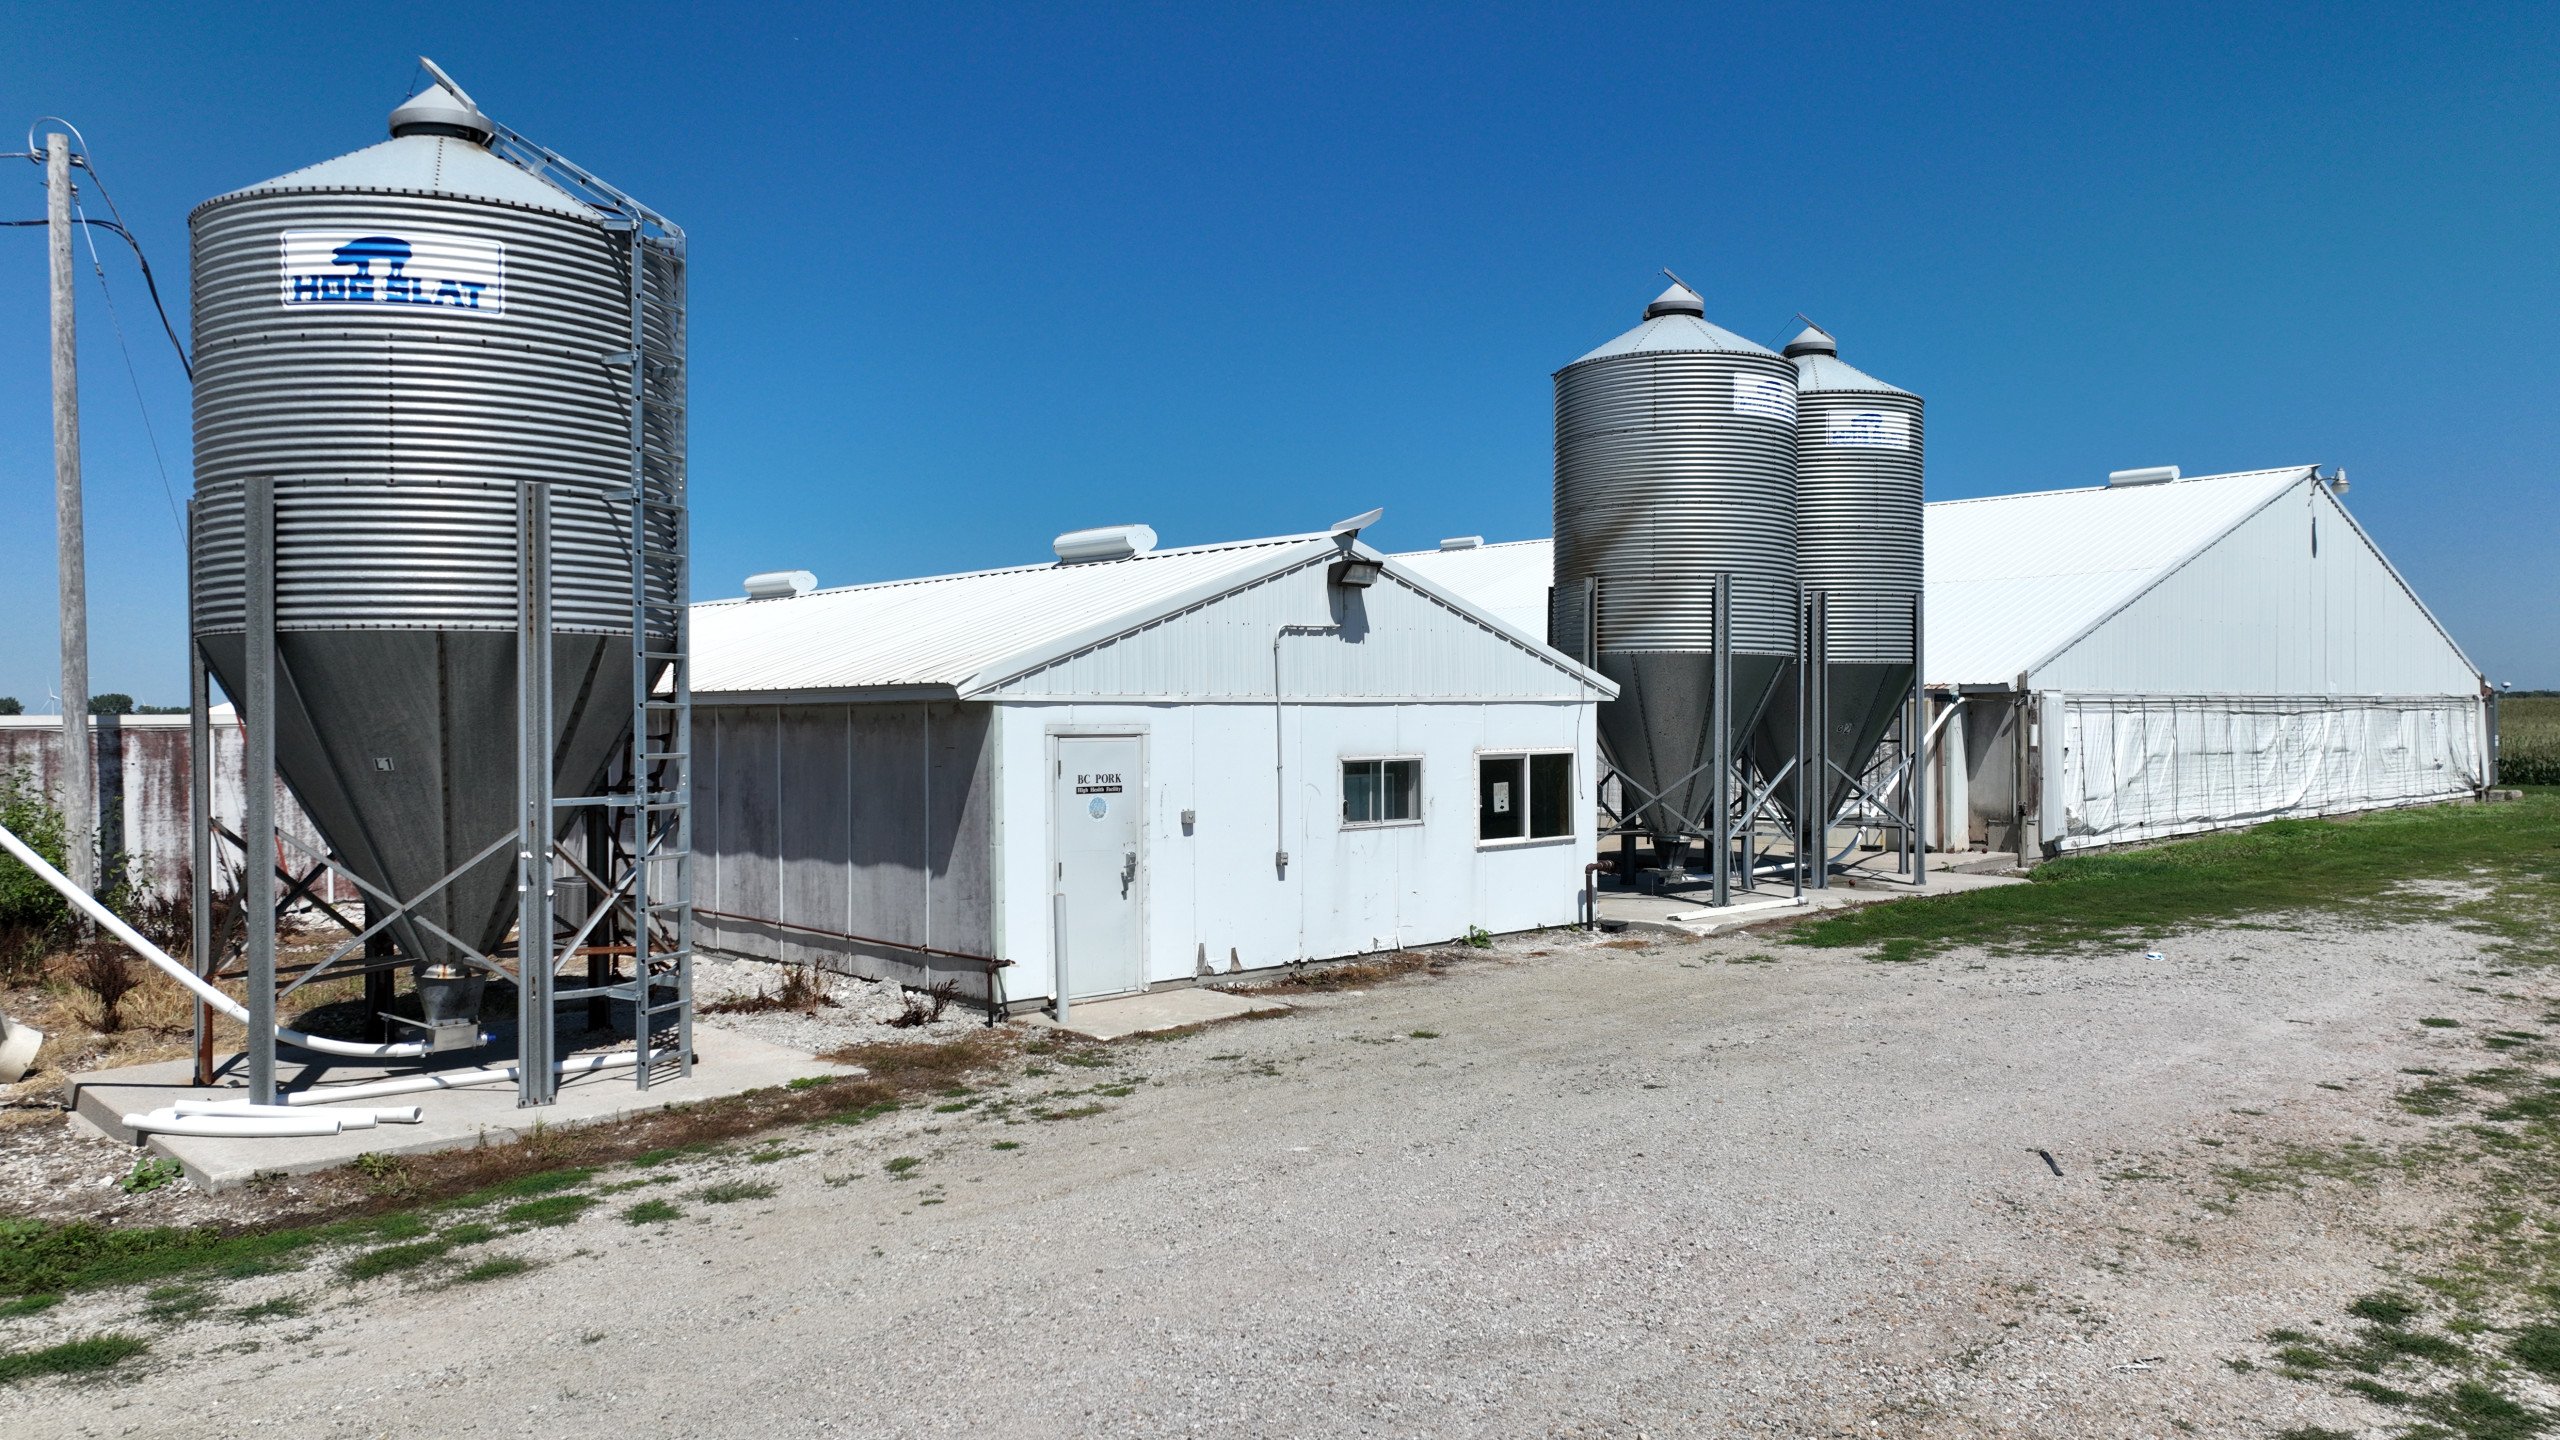 Kossuth County, Iowa Farmland For Sale and Iowa Hog Facility For Sale